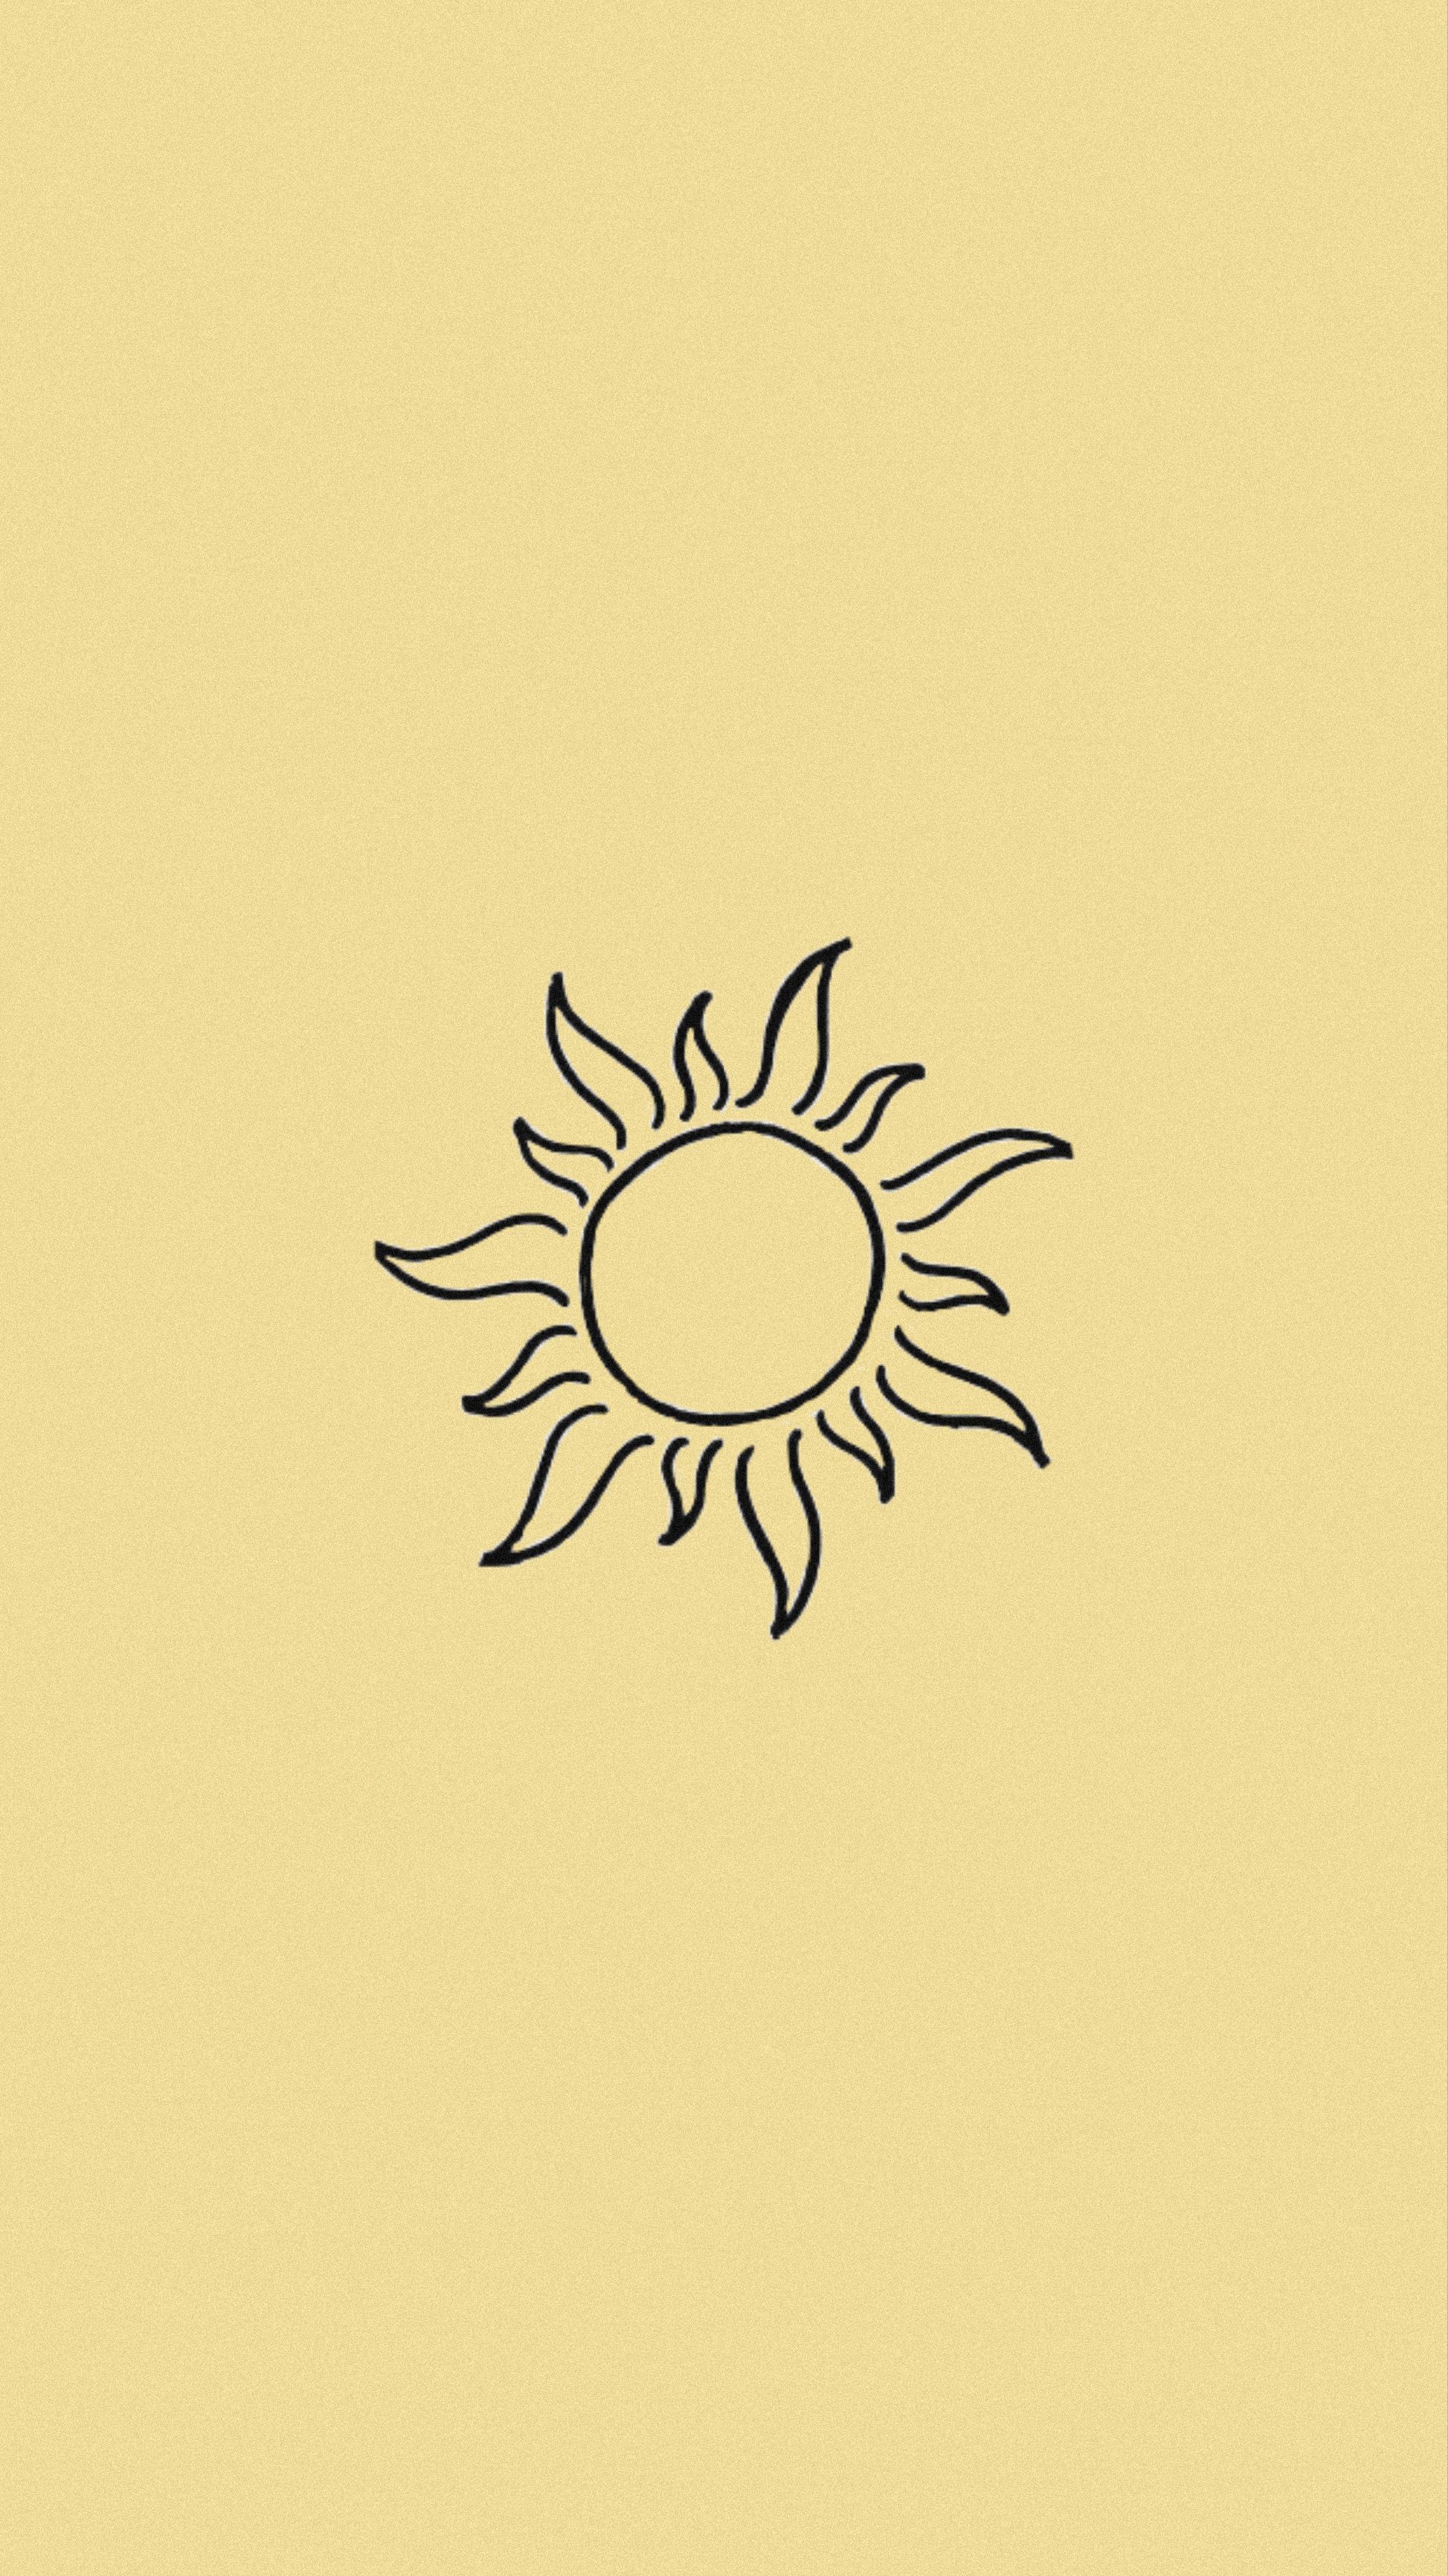 A black and white sun symbol on yellow - Sun, sunlight, sunshine